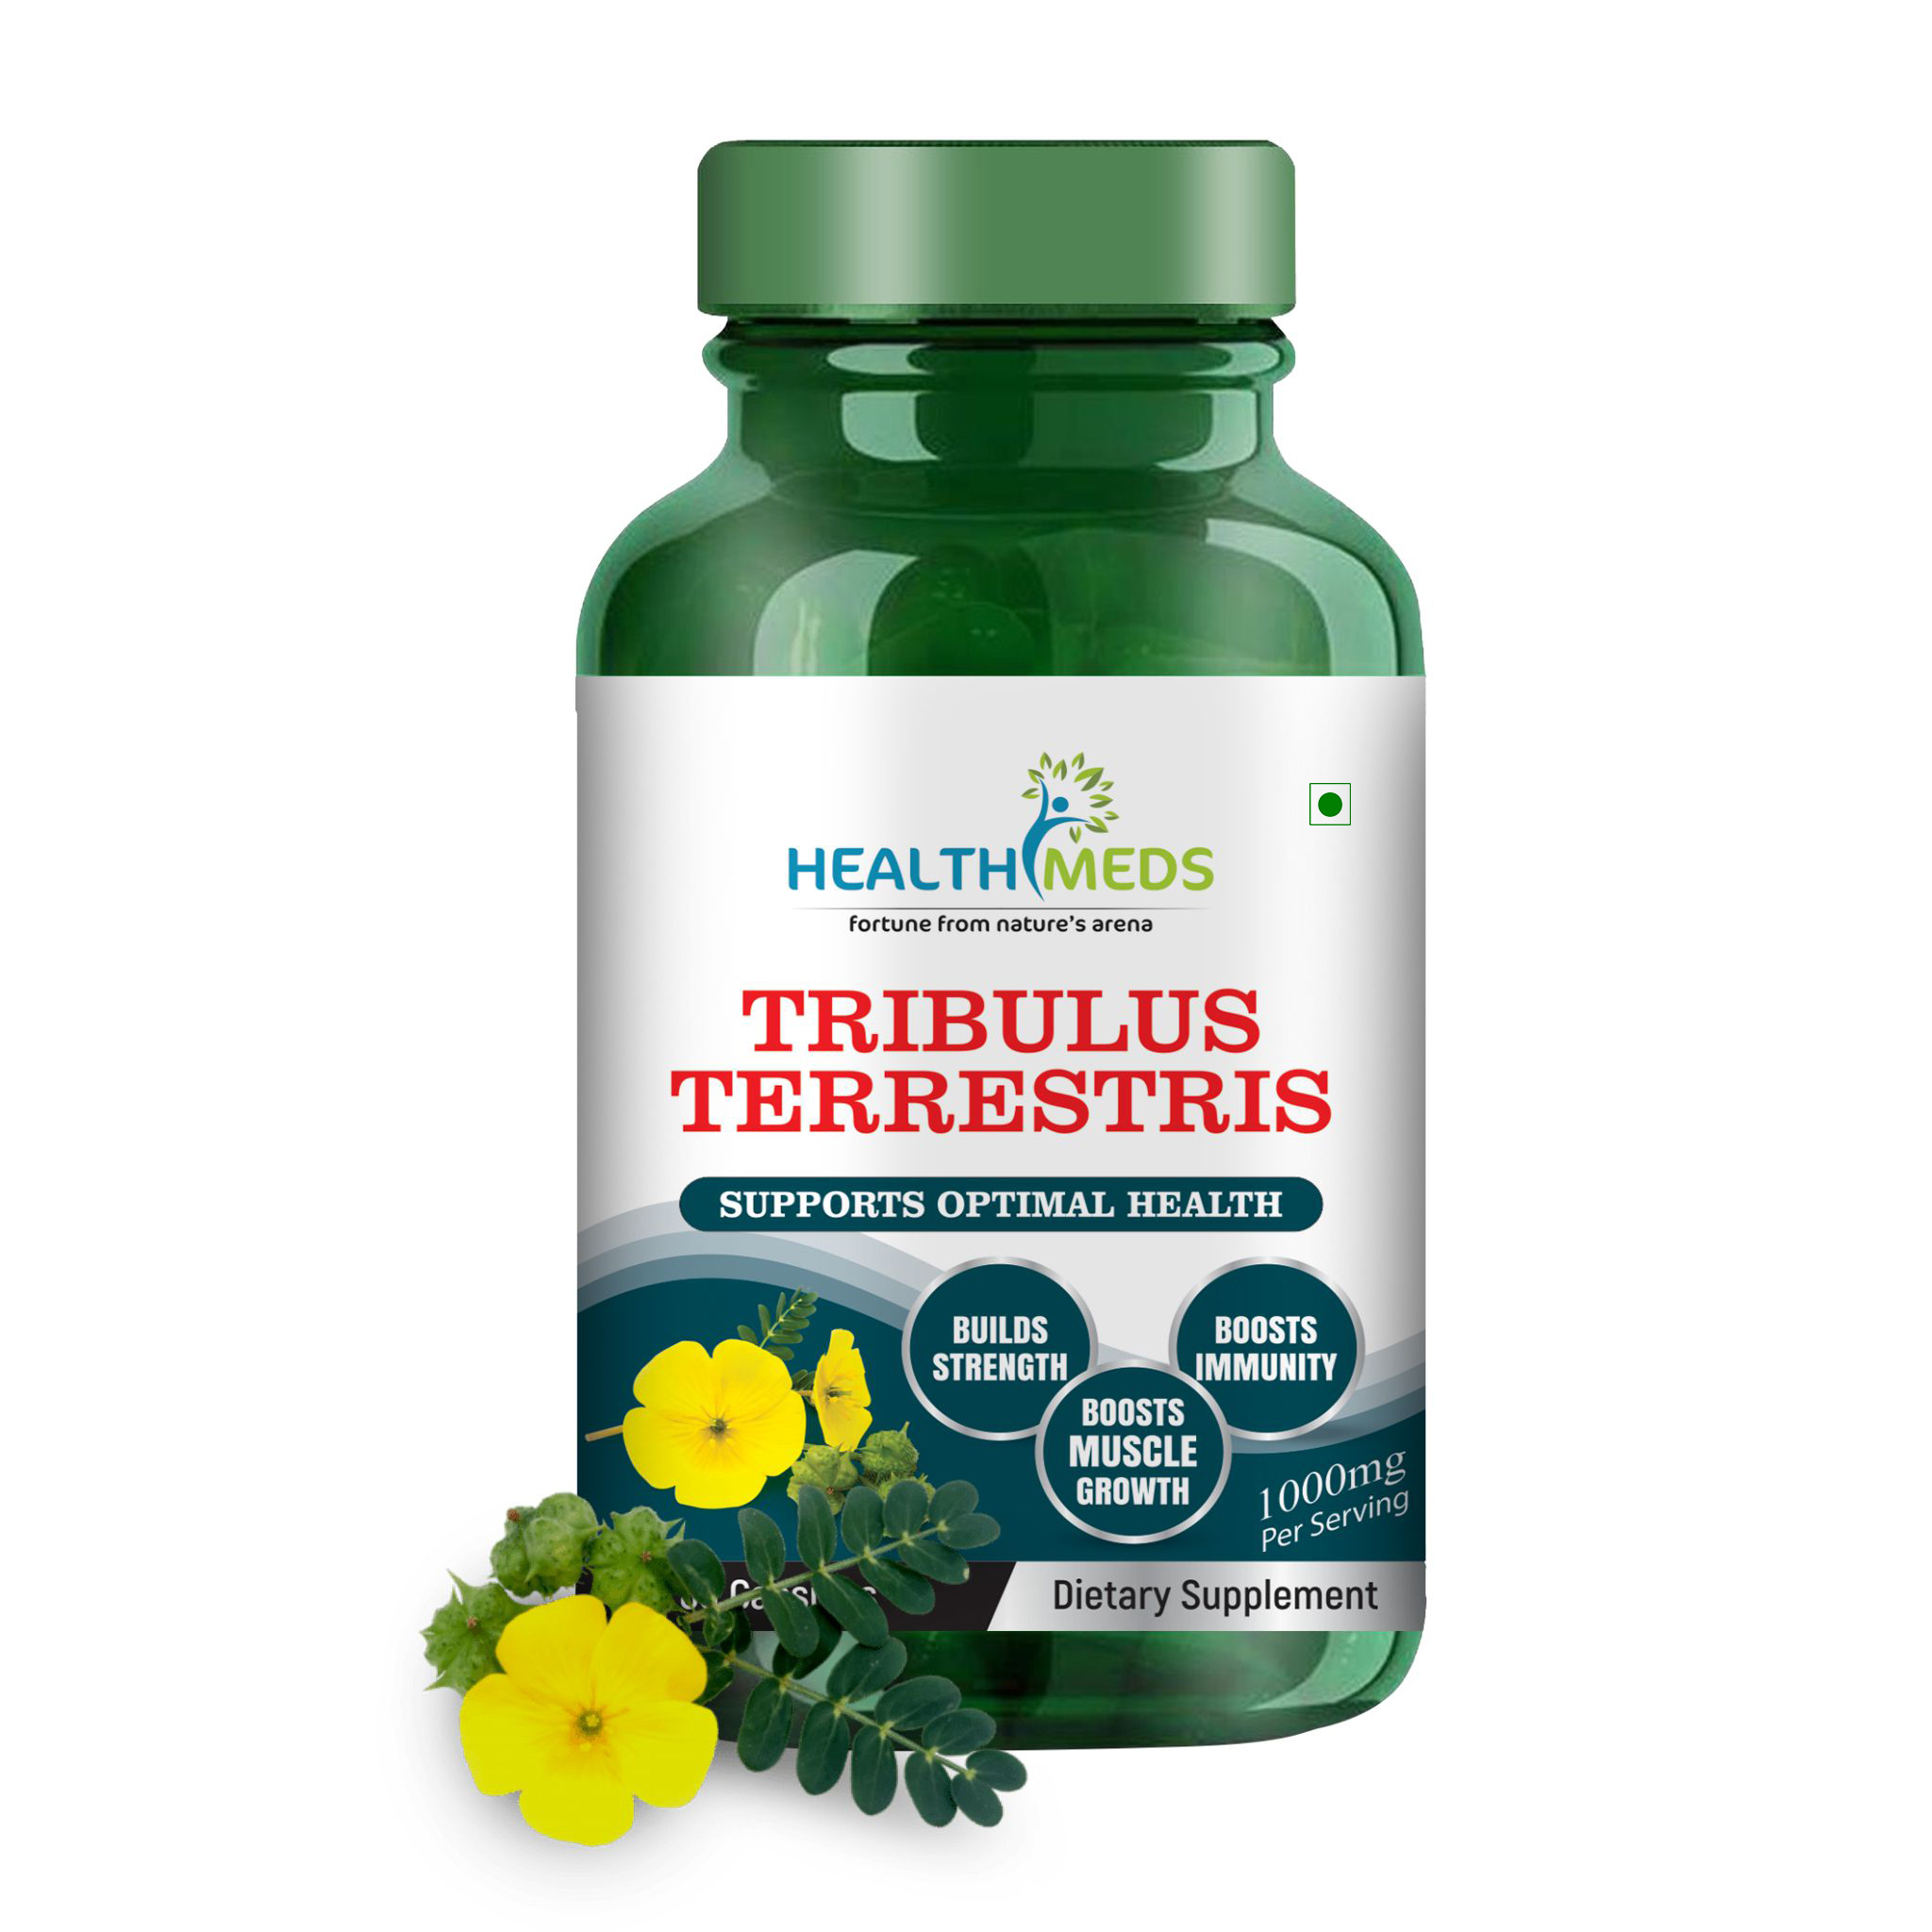 Tribulus Terrestris Healthmeds Creative 1 2023